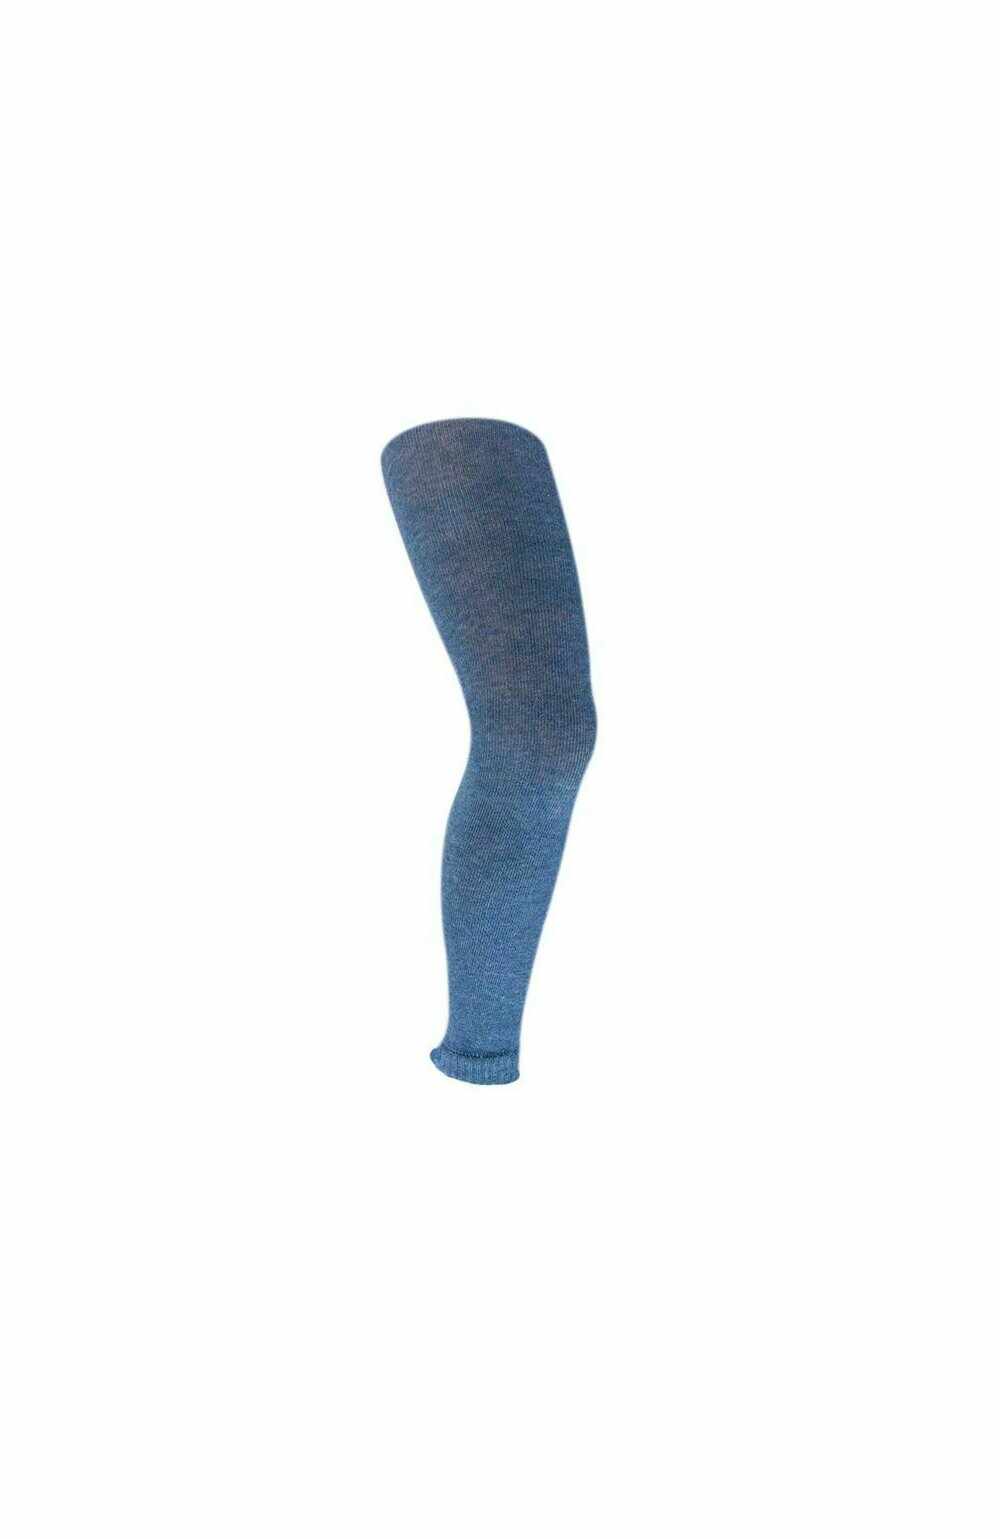 Colanti din bumbac pentru baieti, marimi 104-154 cm, YO CLUB KA02 albastru, bleumarin, negru, gri